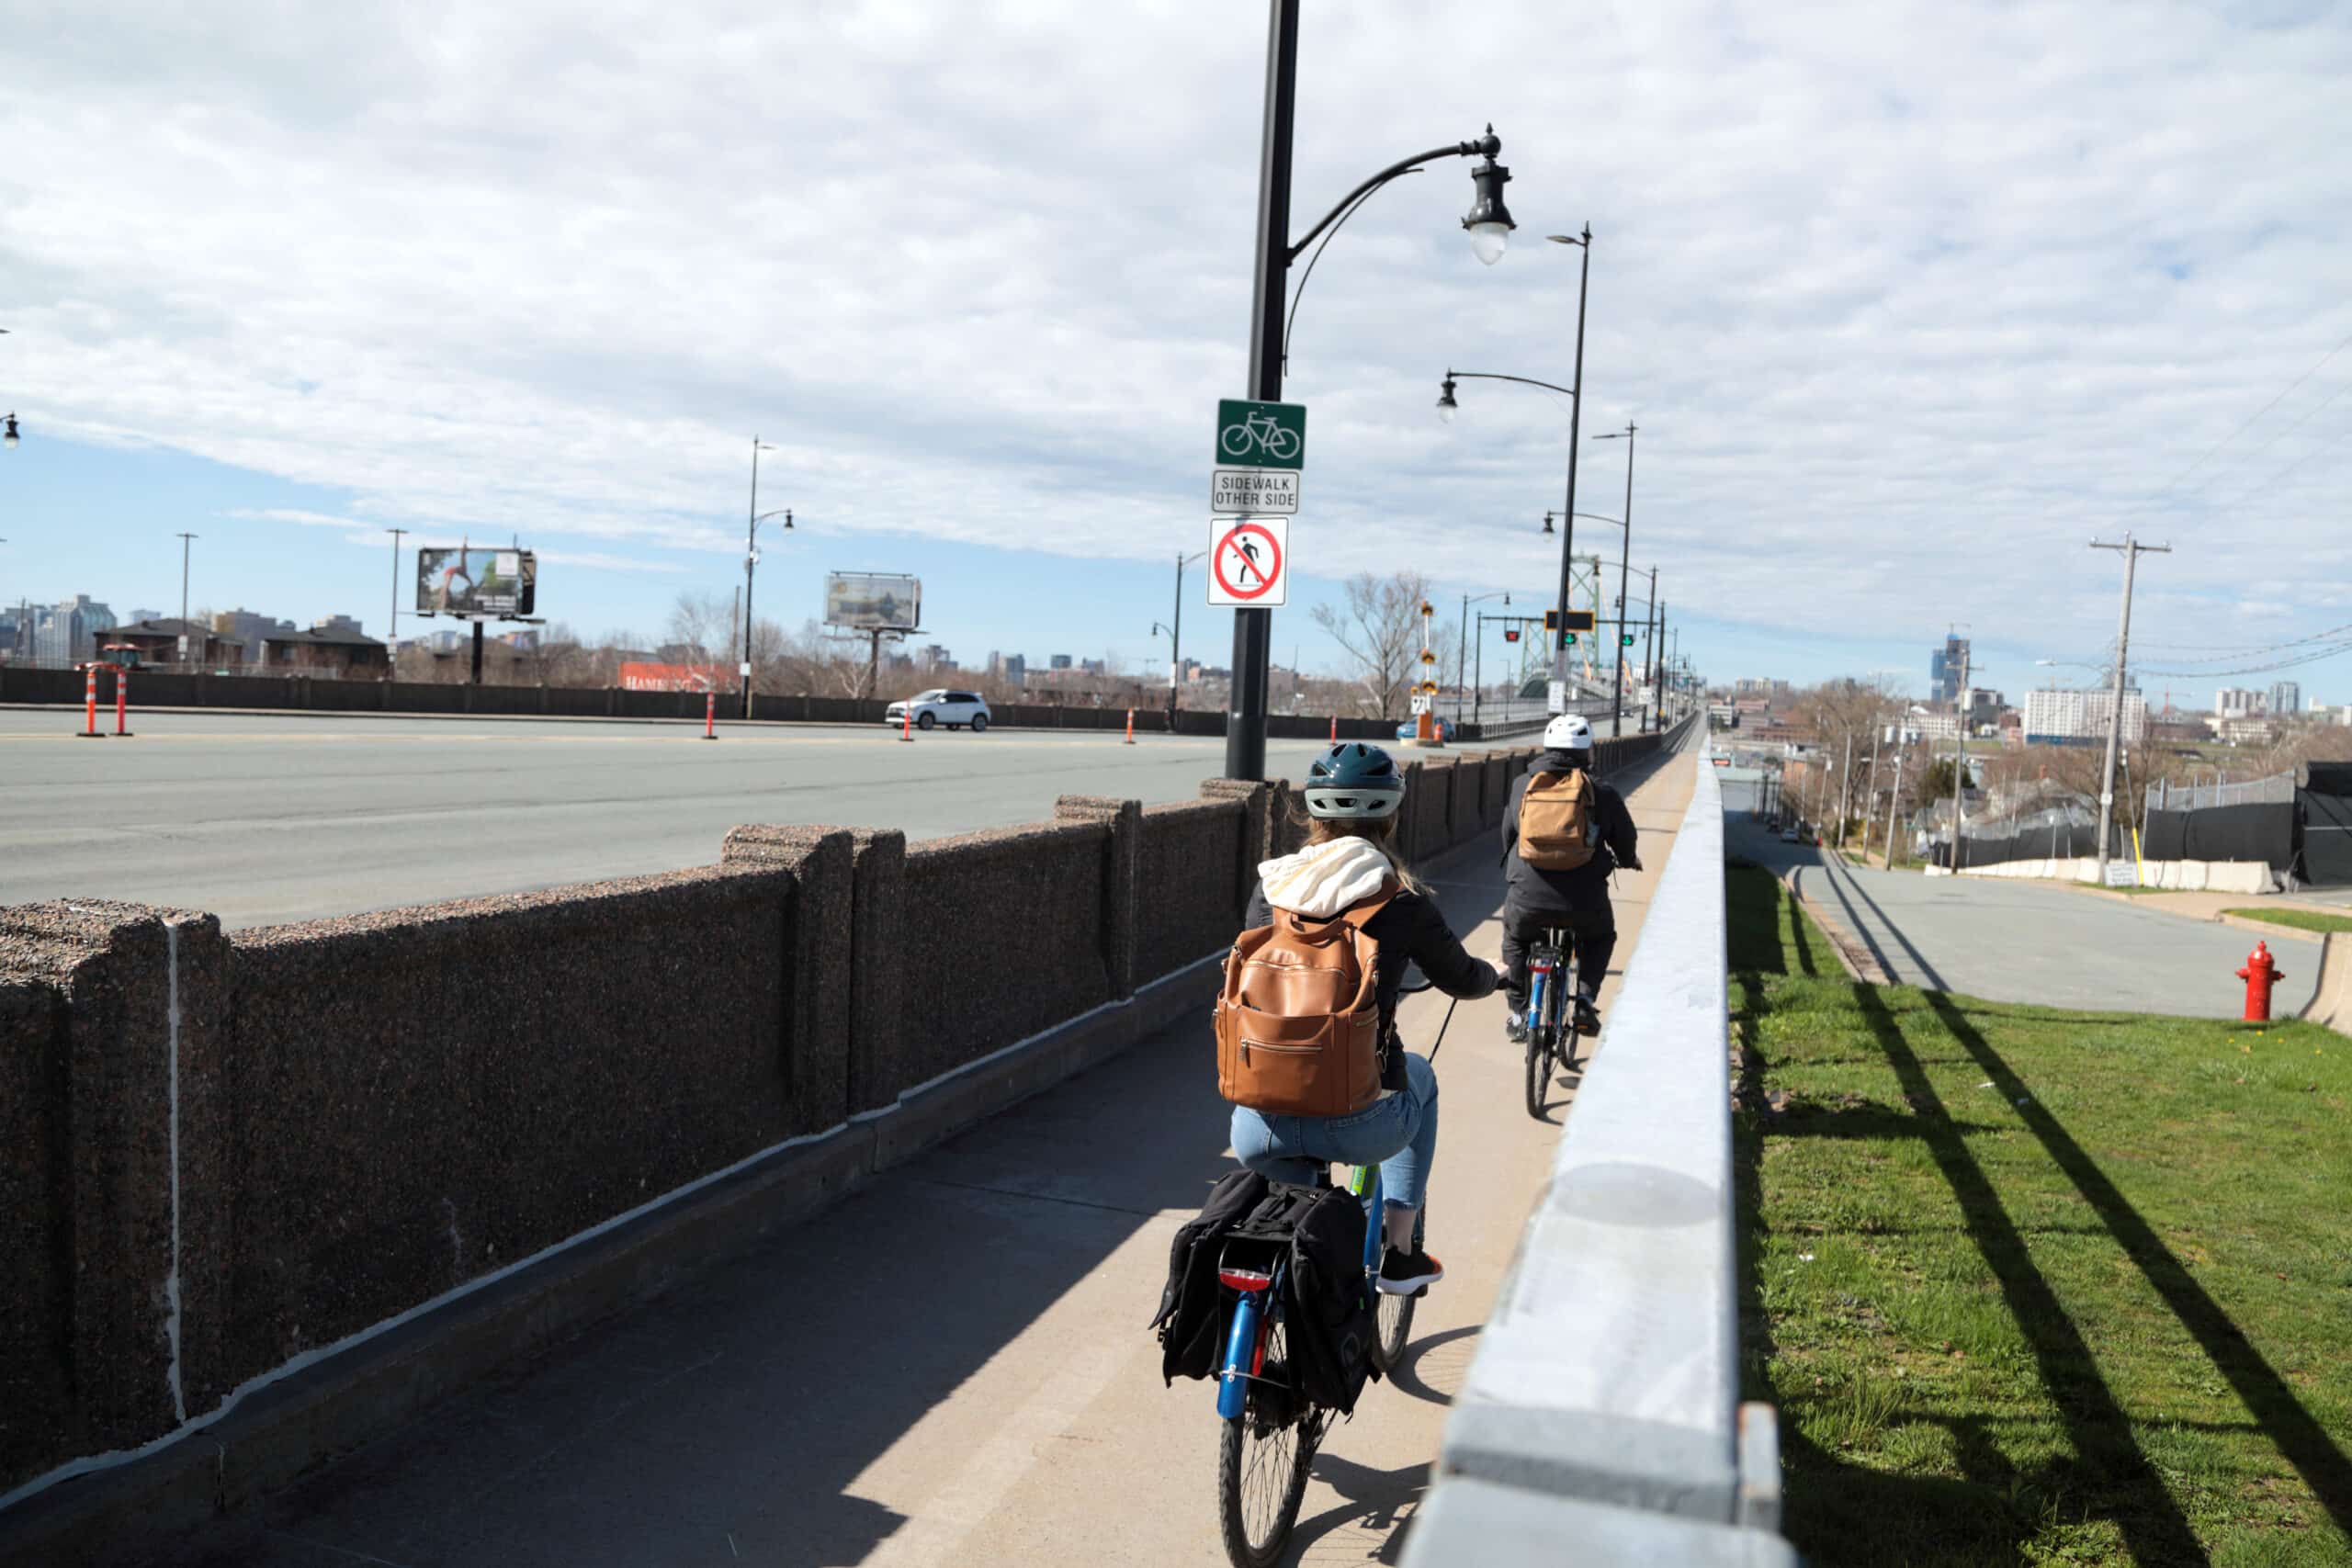 Cyclists ride their bikes in the Macdonald Bridge bike lane.